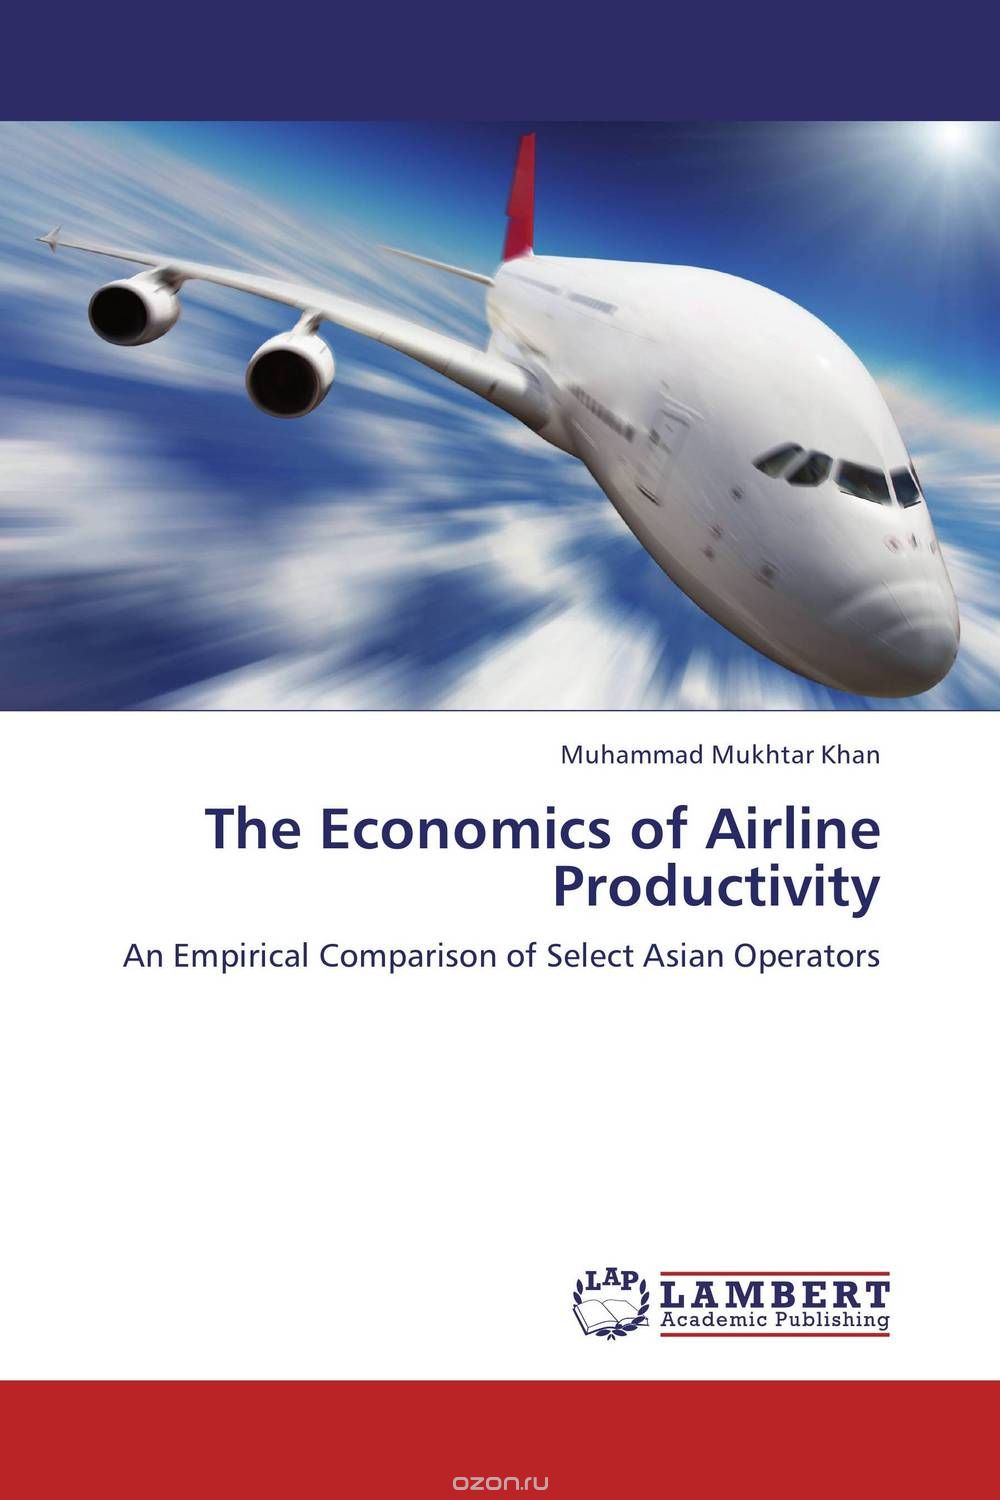 Скачать книгу "The Economics of Airline Productivity"